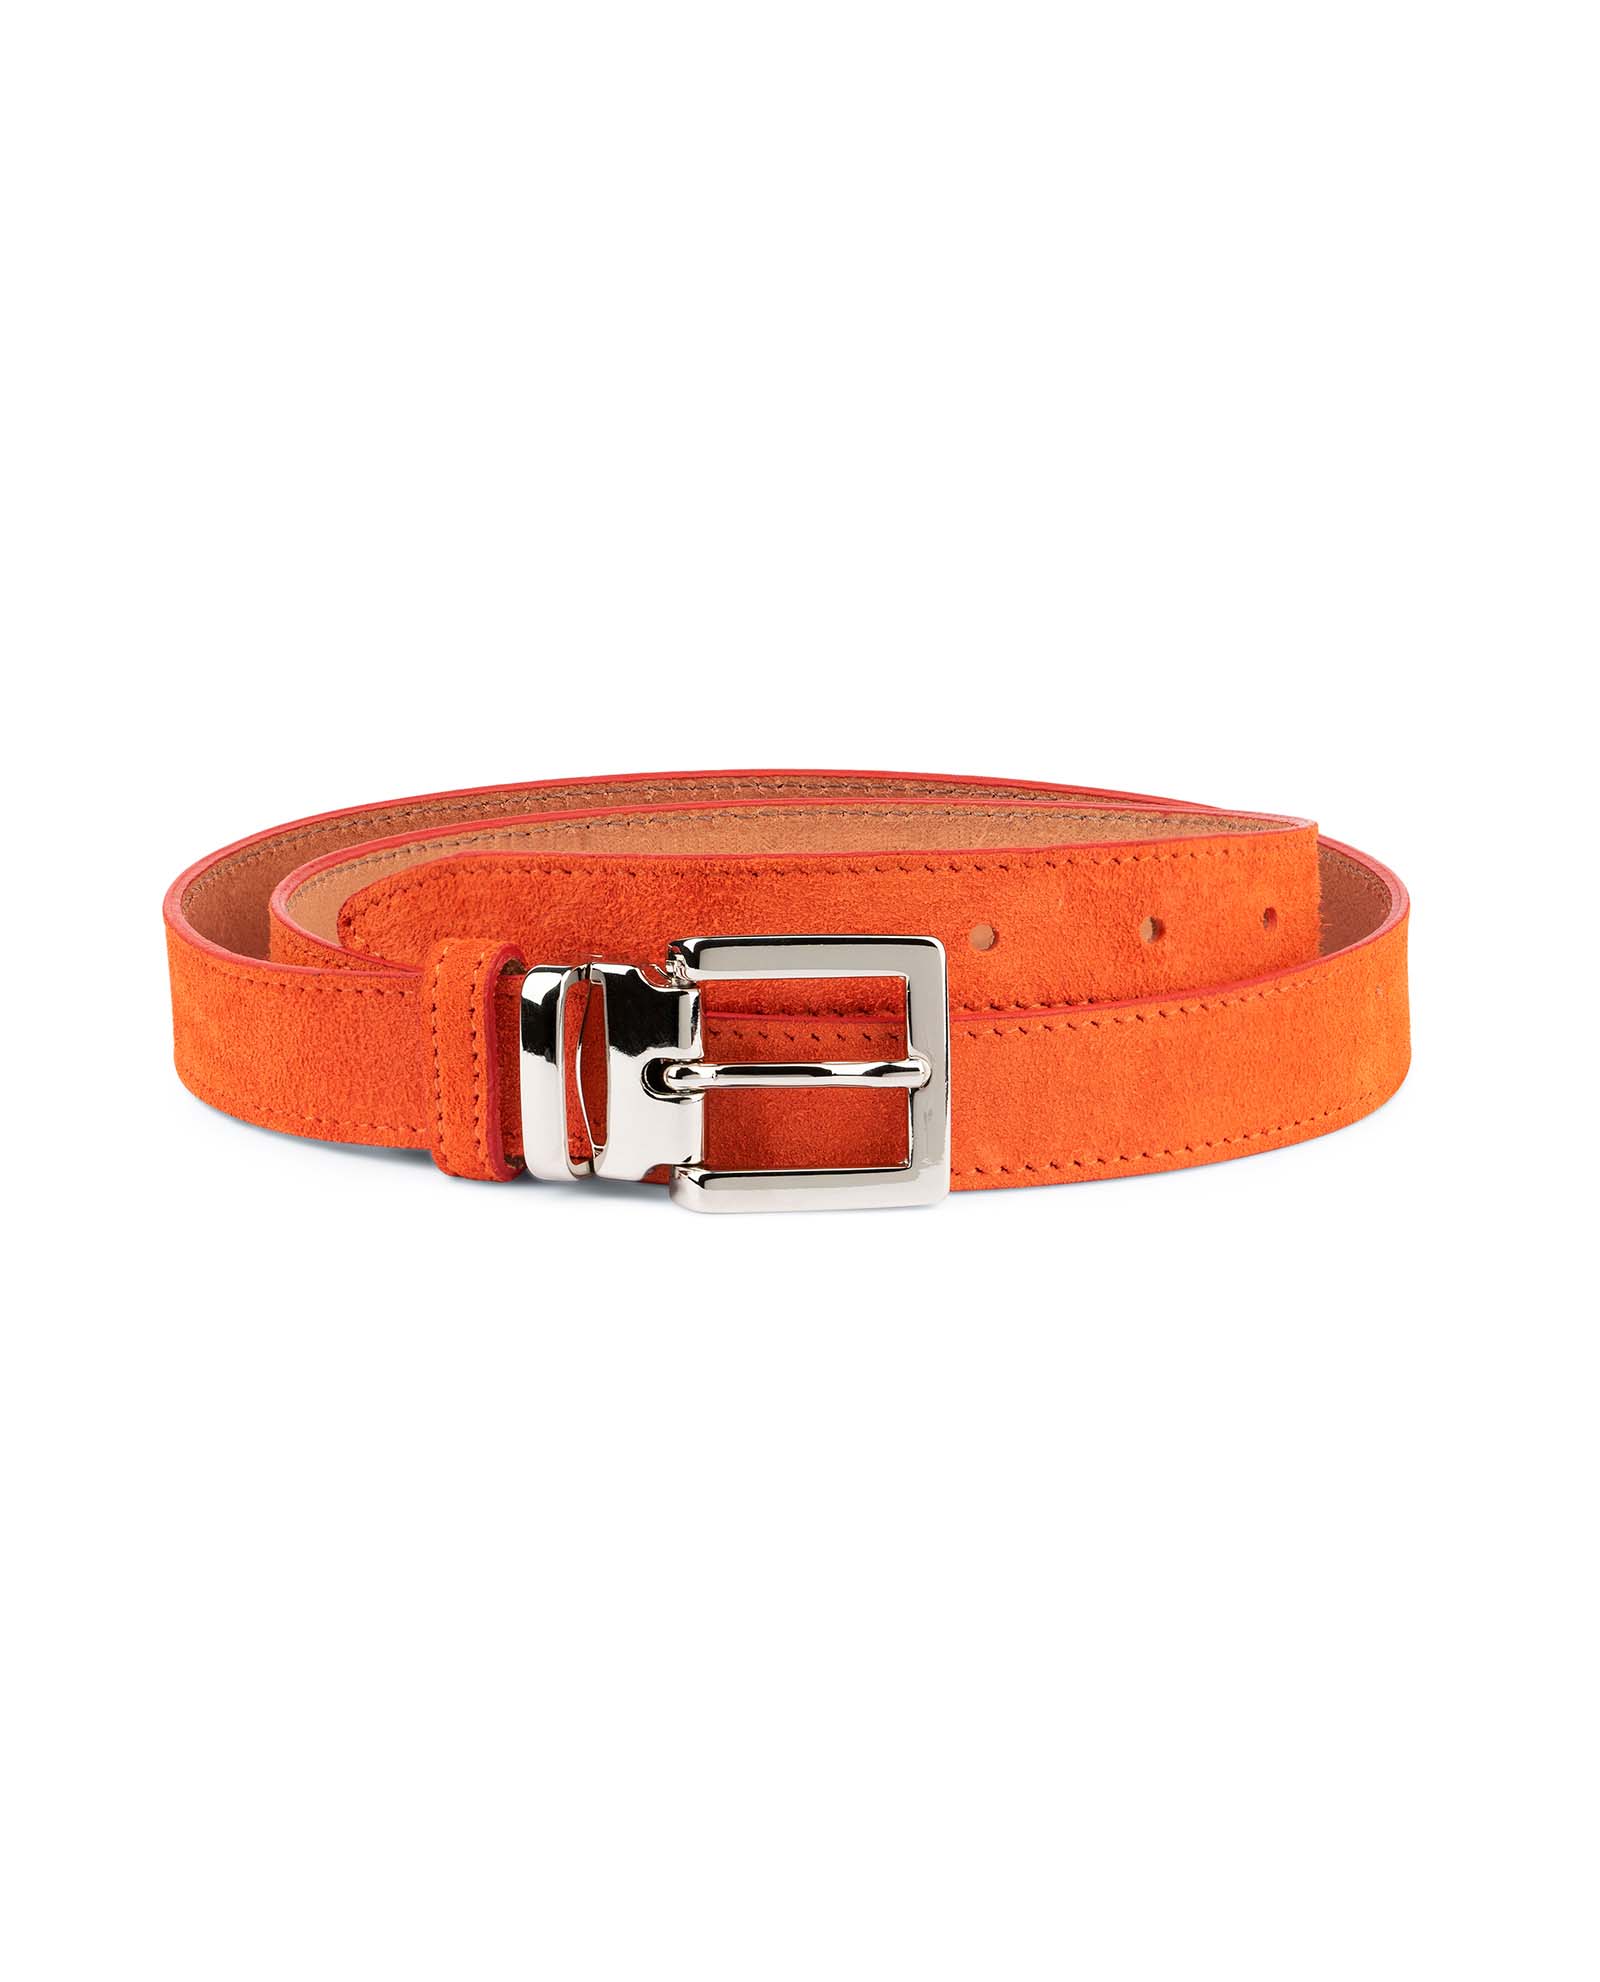 NoName belt WOMEN FASHION Accessories Belt Orange Orange Single discount 97% 